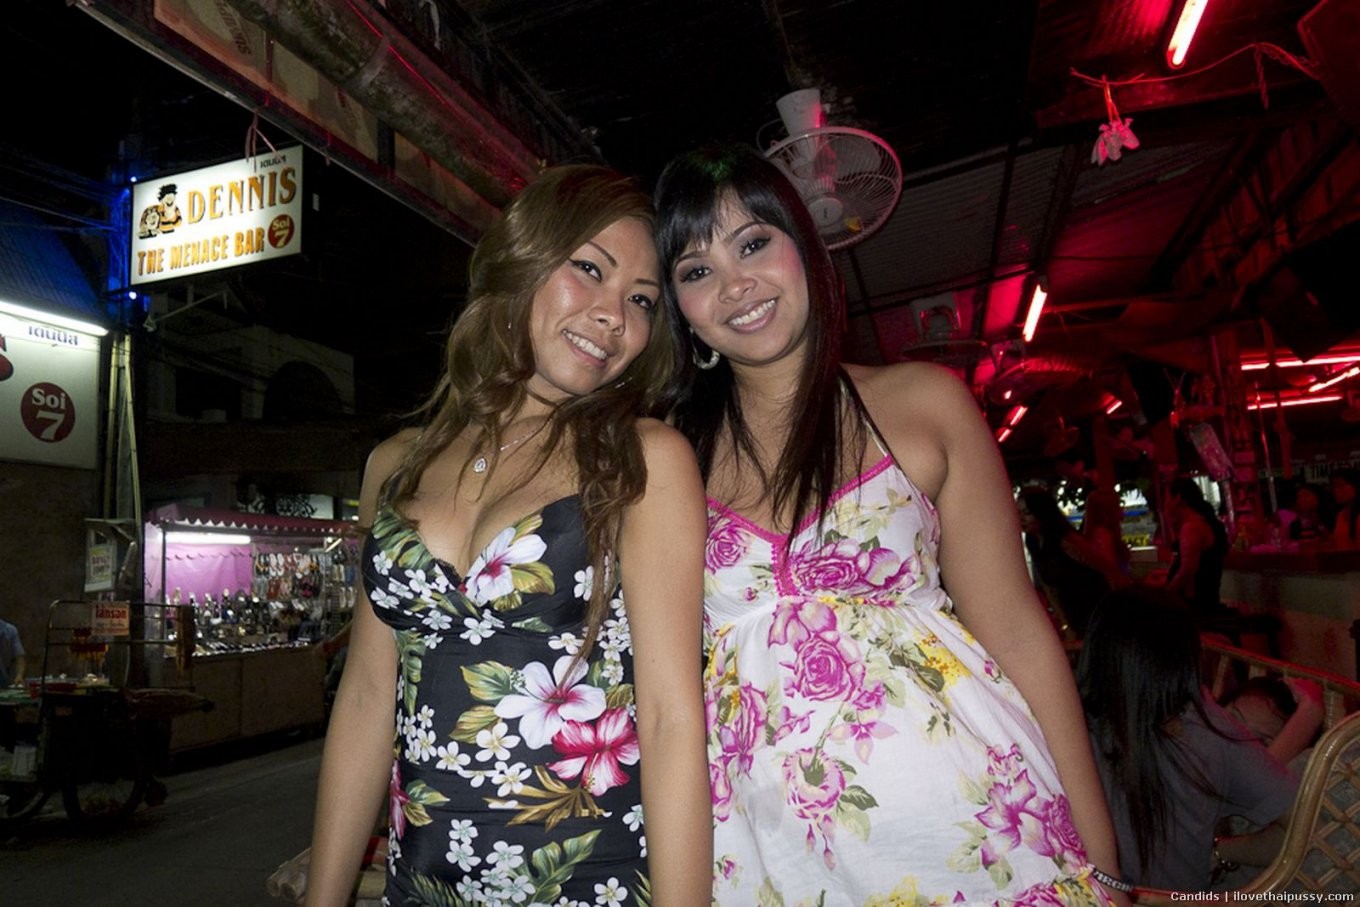 Hot thai bargirl hooker loves bareback no condom fucking sex tourists asian puss #67970478